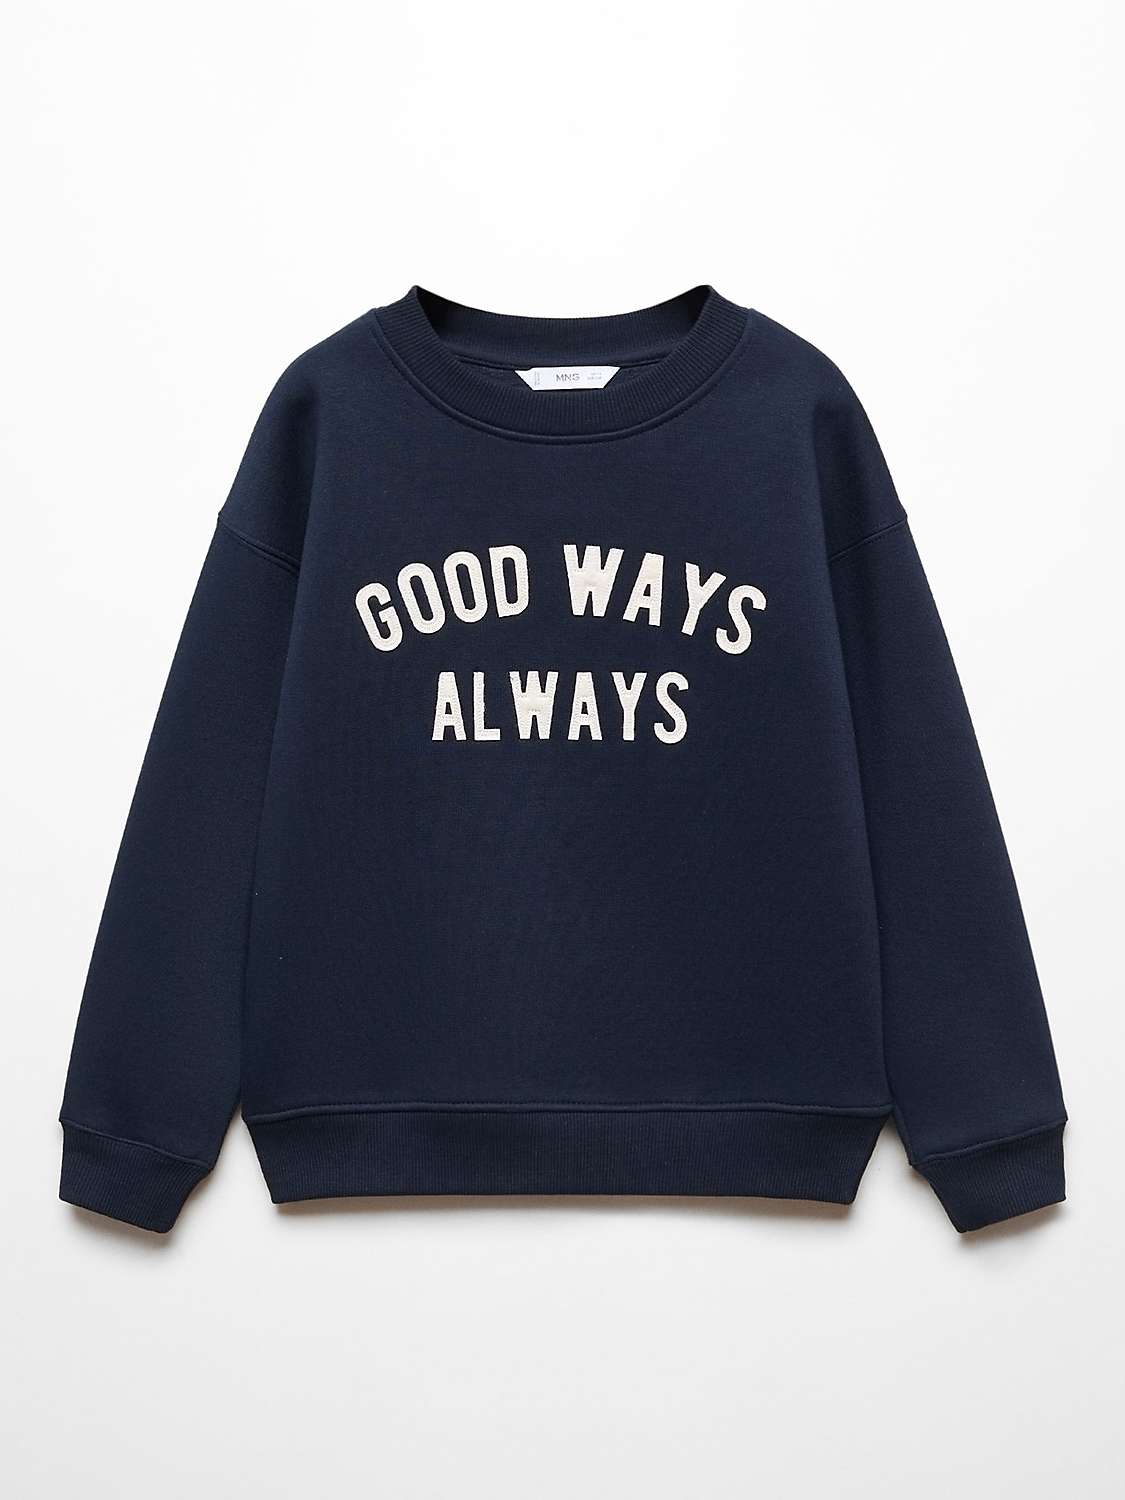 Buy Mango Kids' Good Ways Embroidered Sweatshirt, Navy Online at johnlewis.com